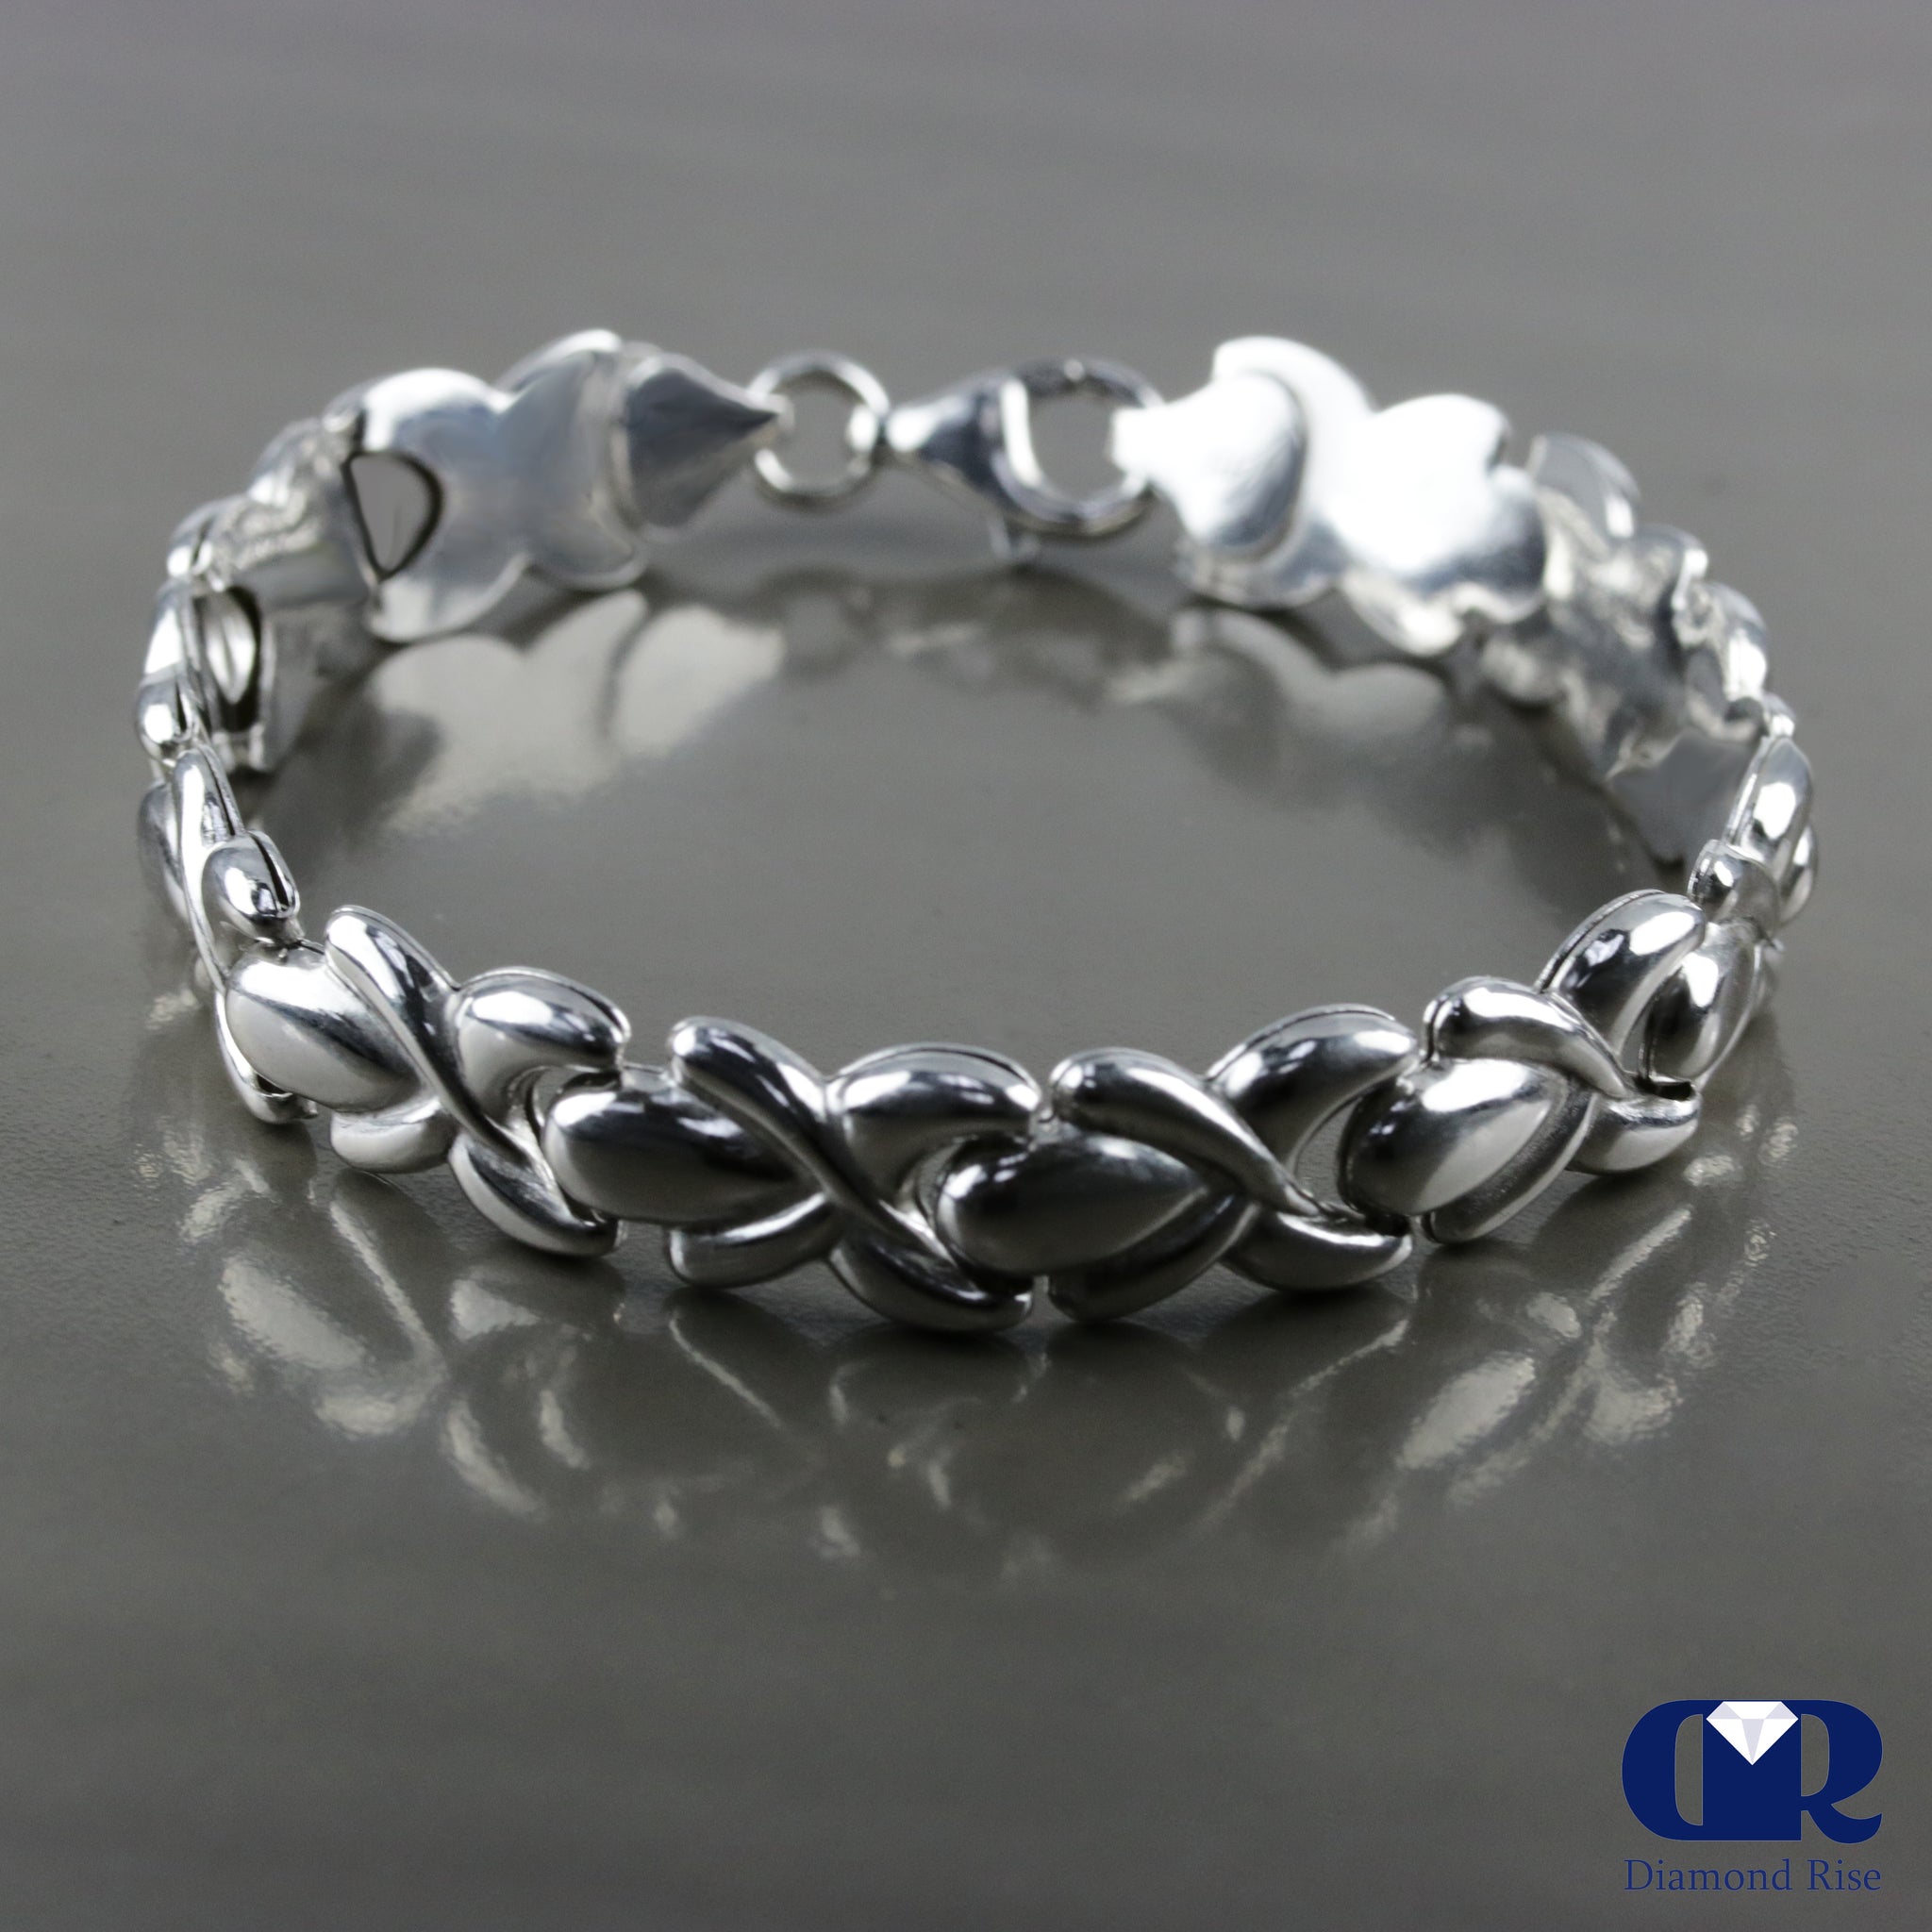 Men Sterling Silver Ivy Pattern Curb Chain Bracelet - Jewelry1000.com